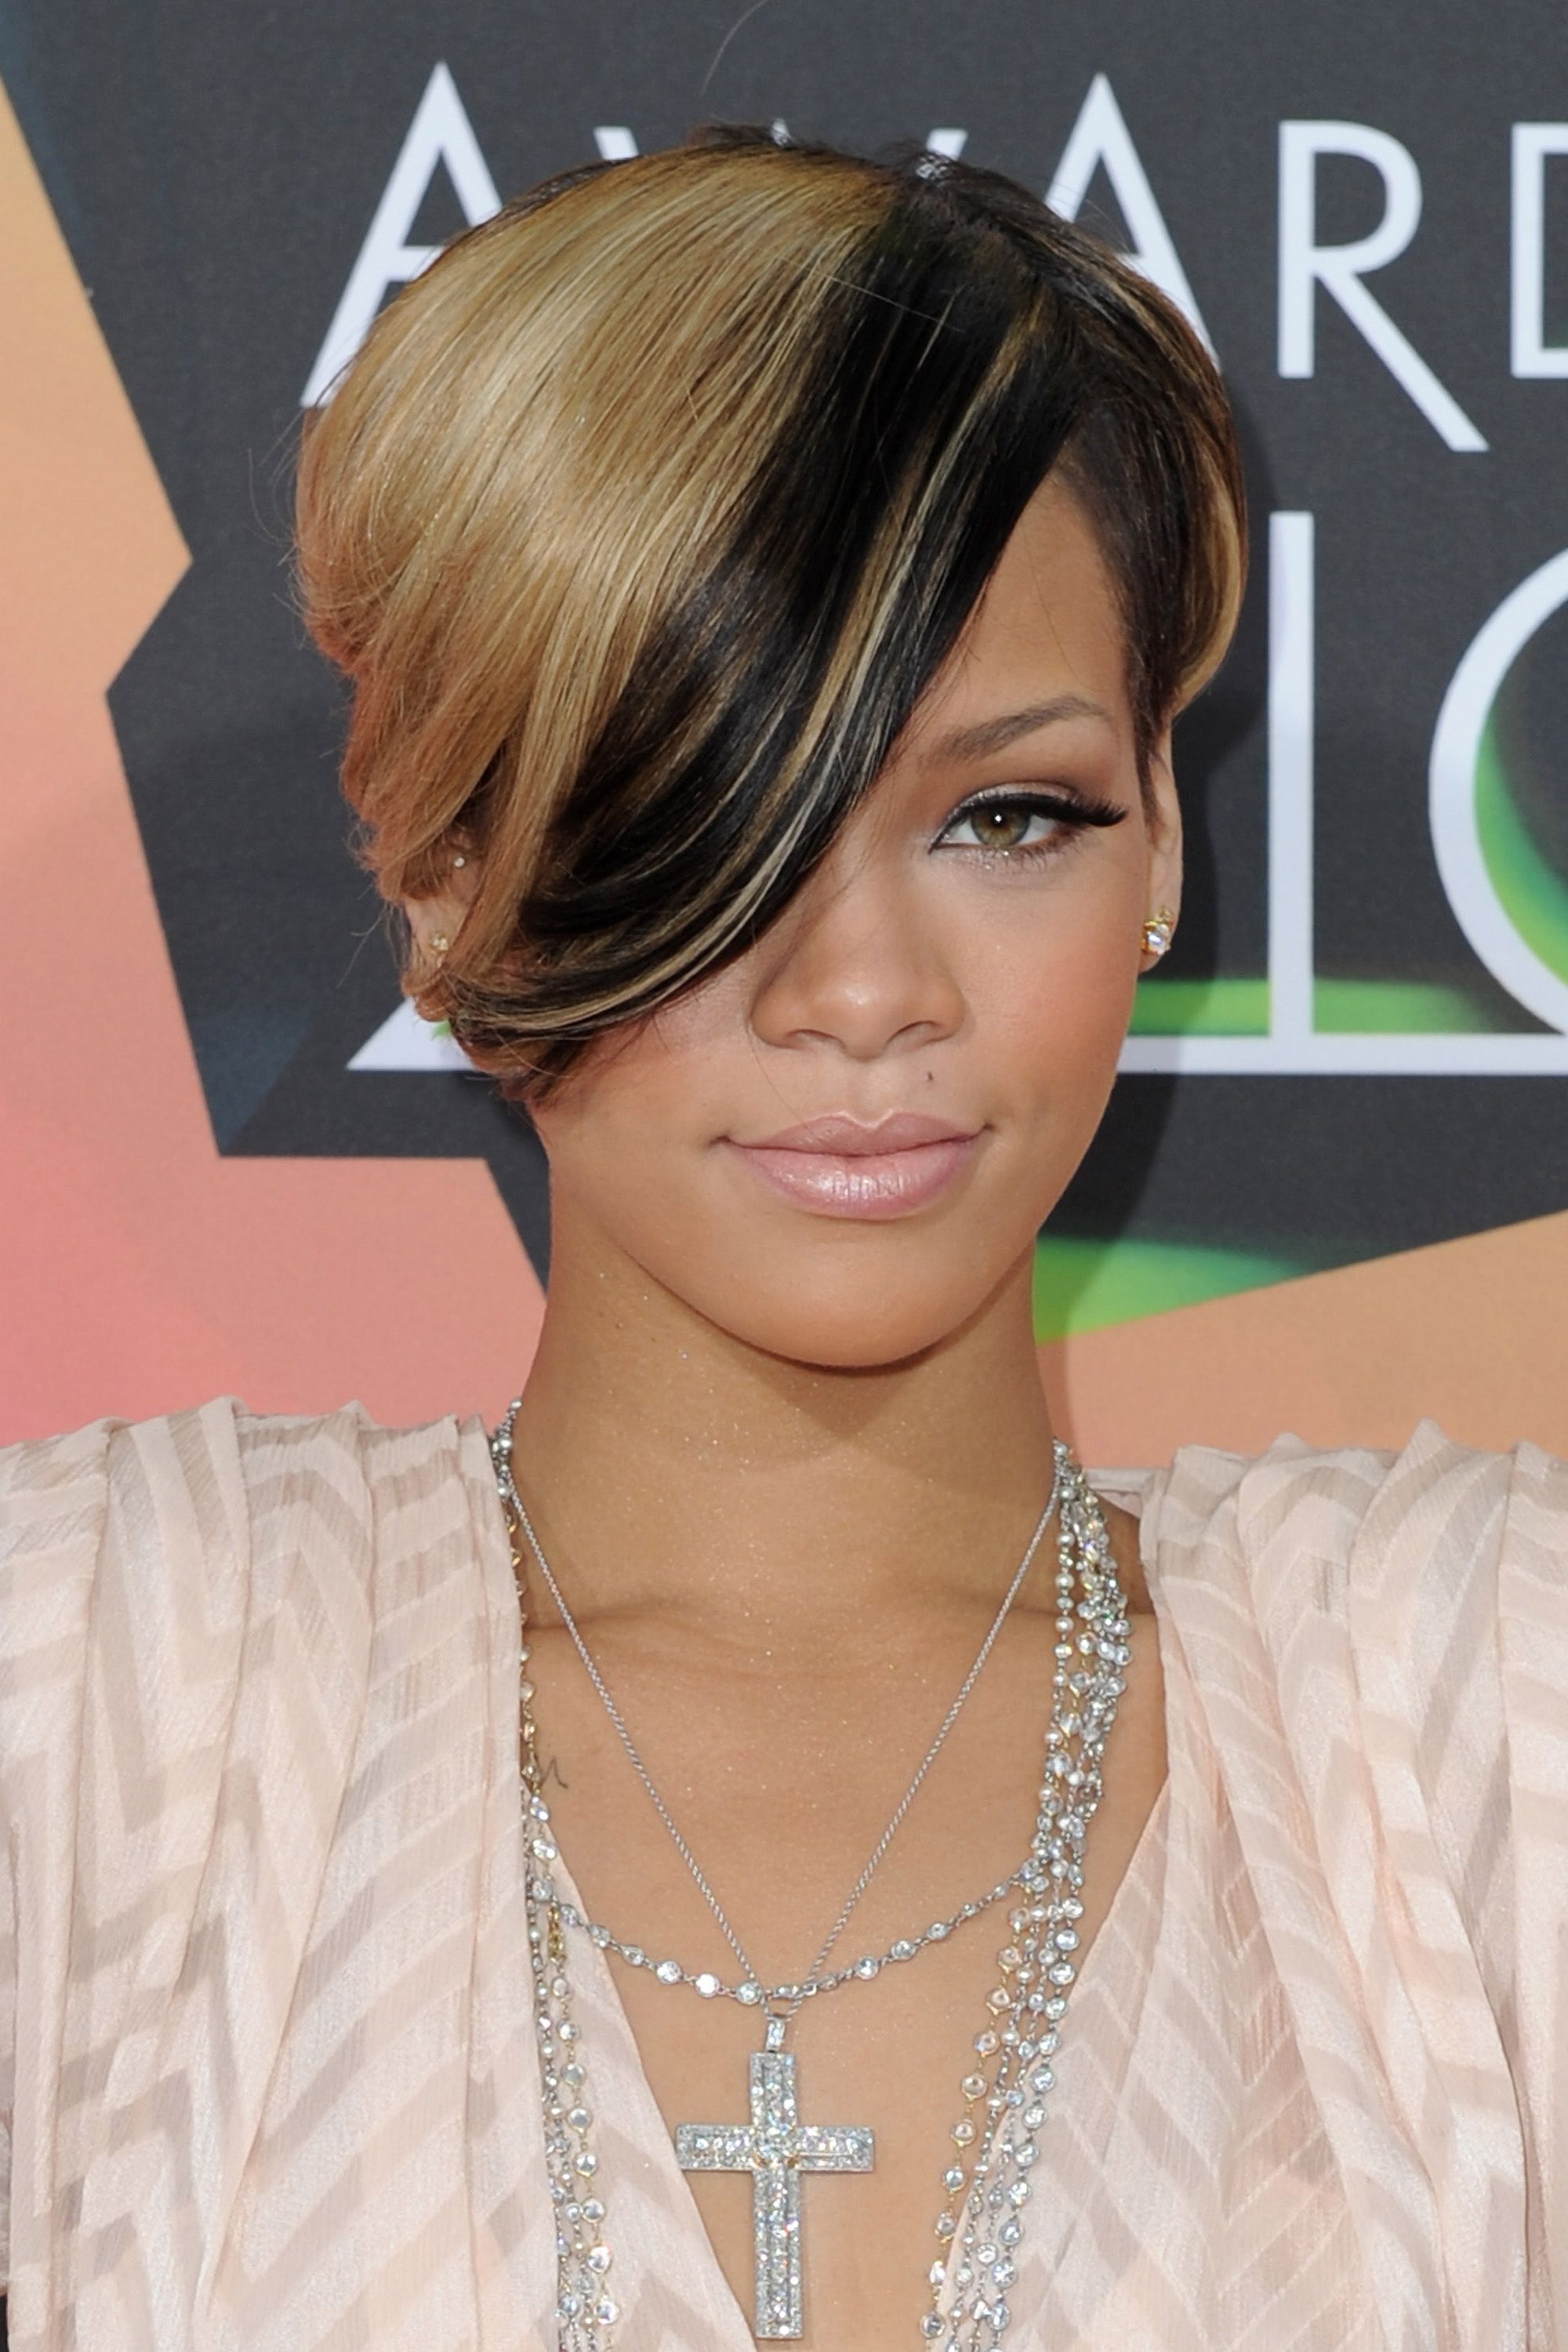 Rihanna hairstyles: Bob haircut makes its debut on 'Ellen'